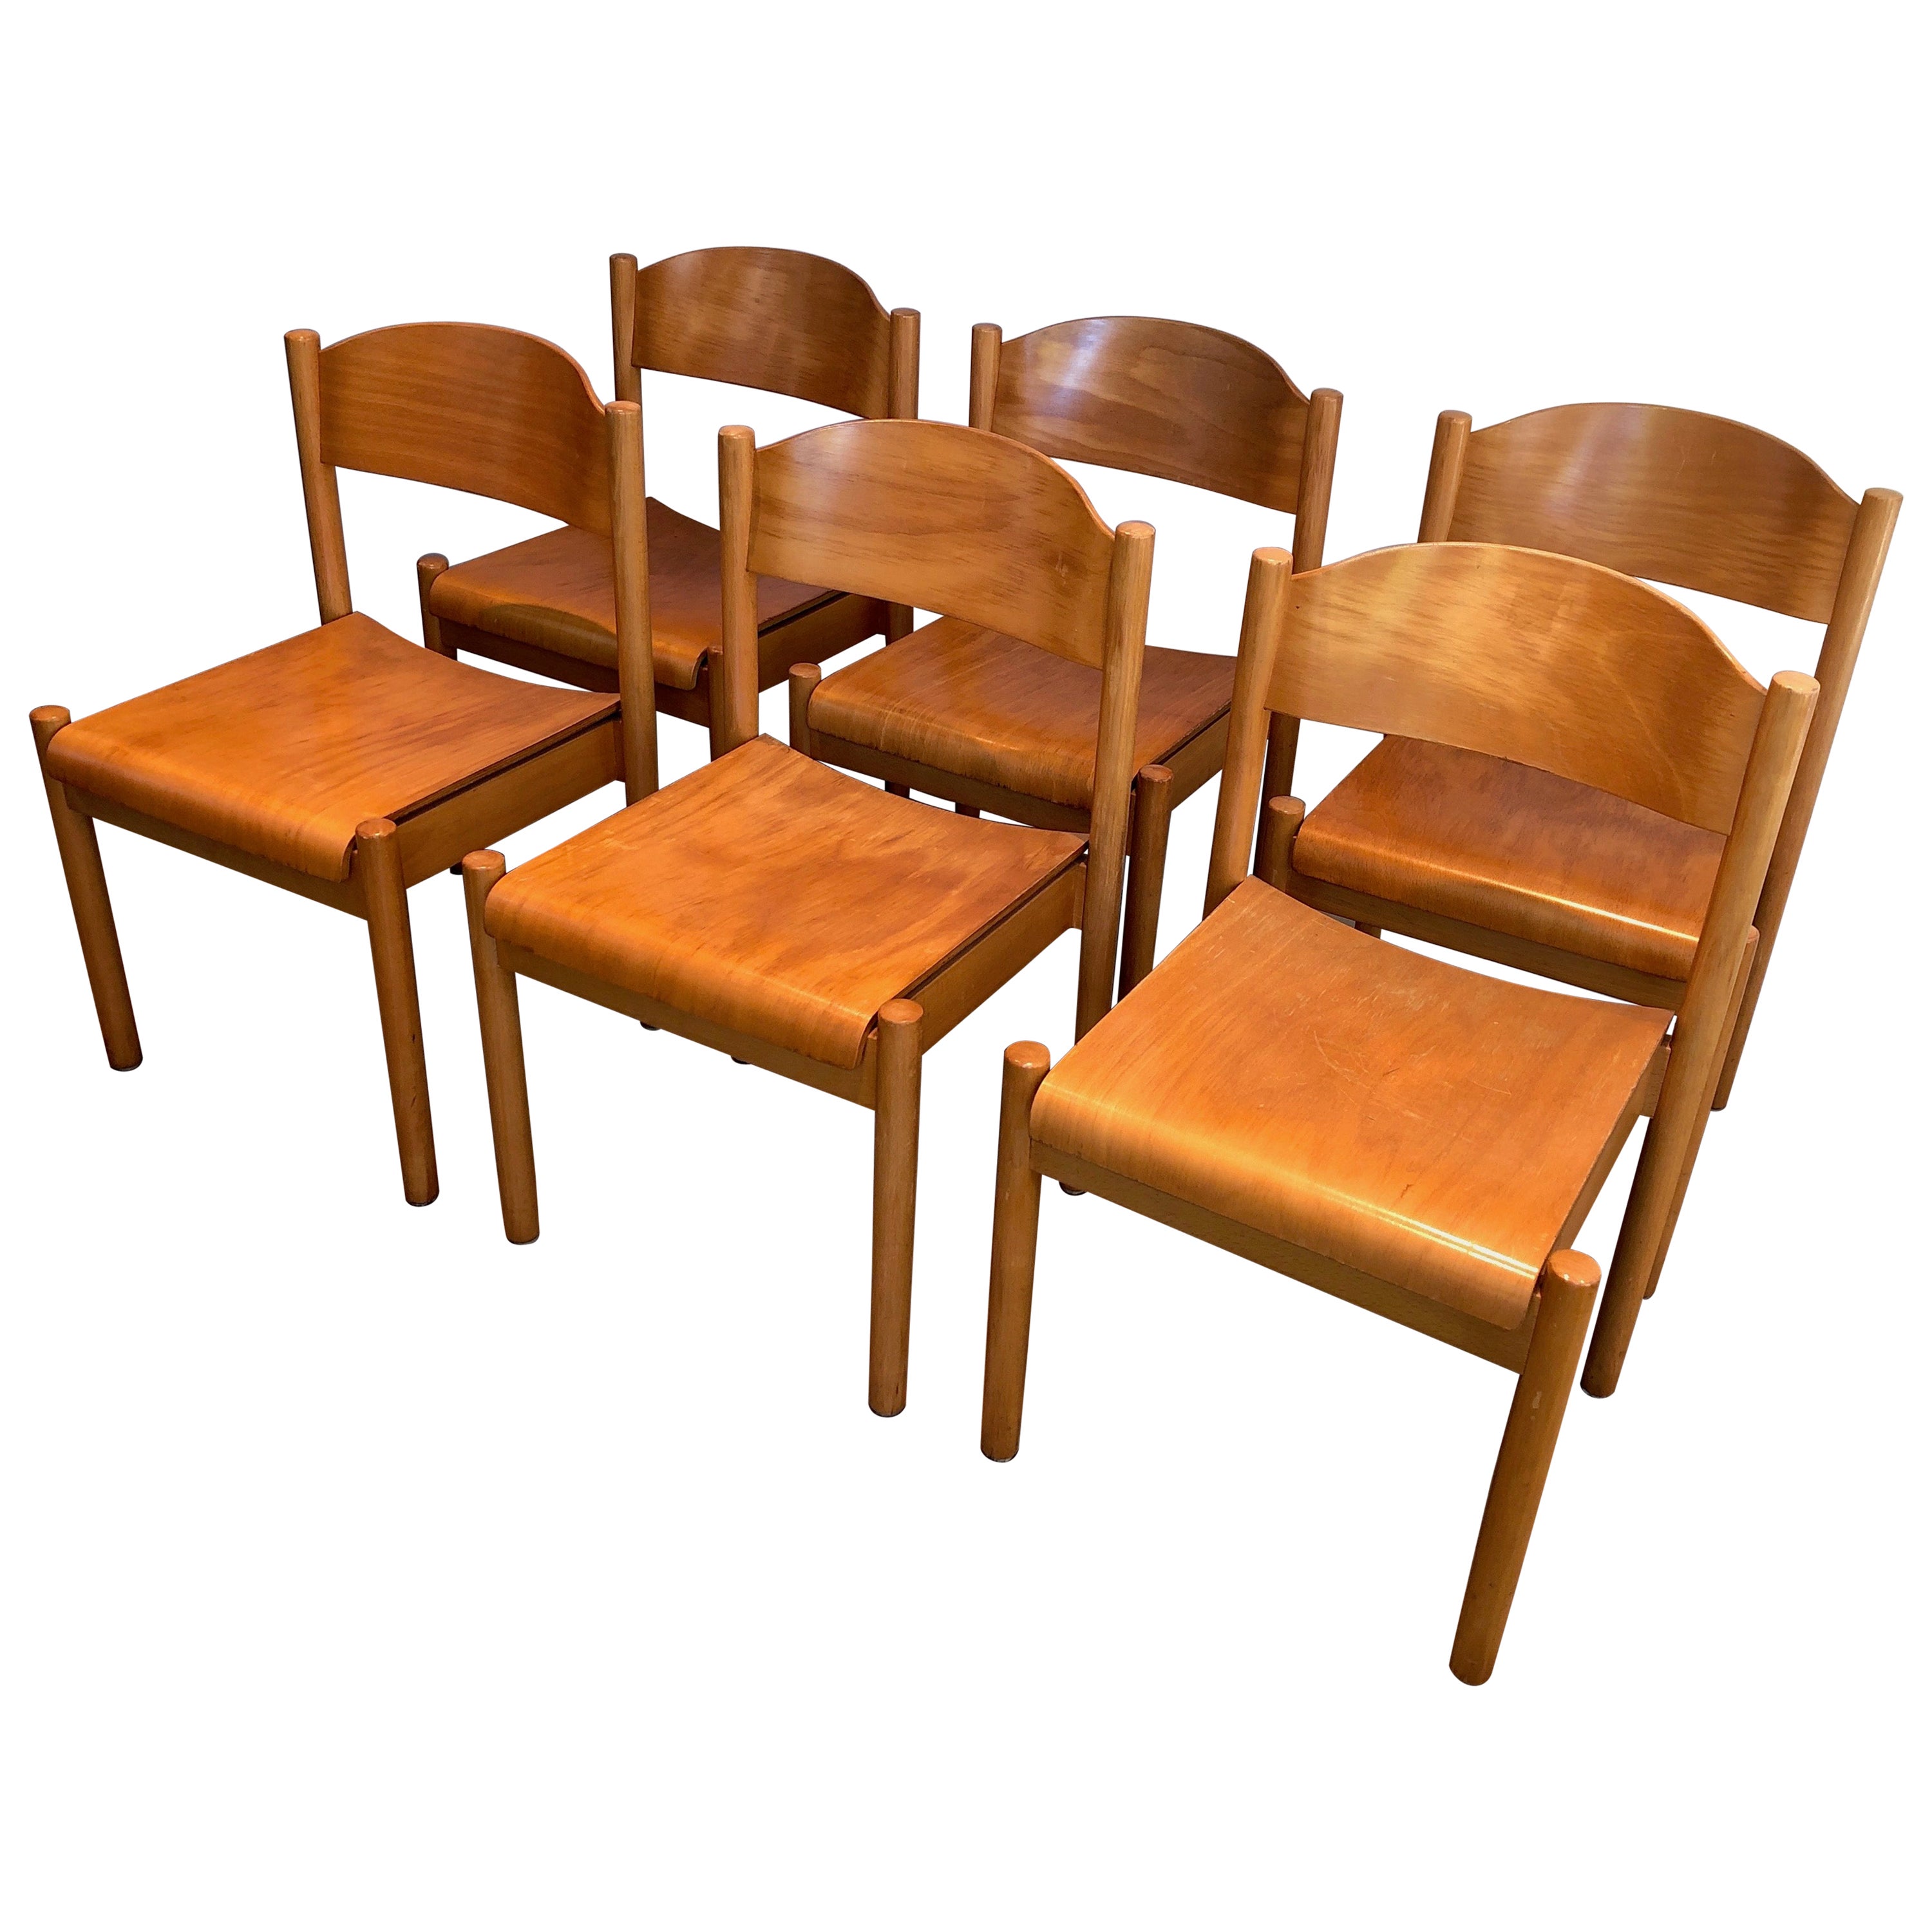 Set of 6 Stackable Pine Chairs, German Work by Karl Klipper, Circa 1970